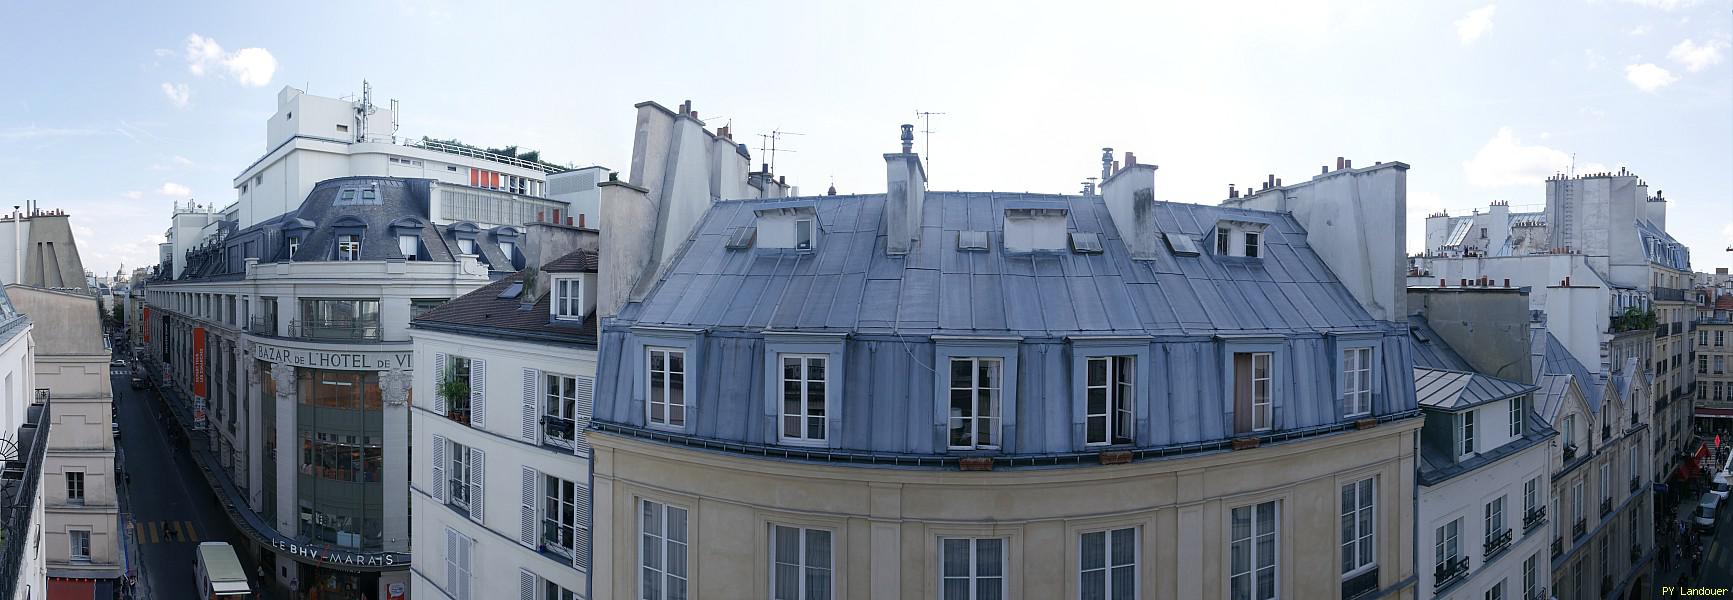 Paris vu d'en haut, 46 rue de la Verrerie